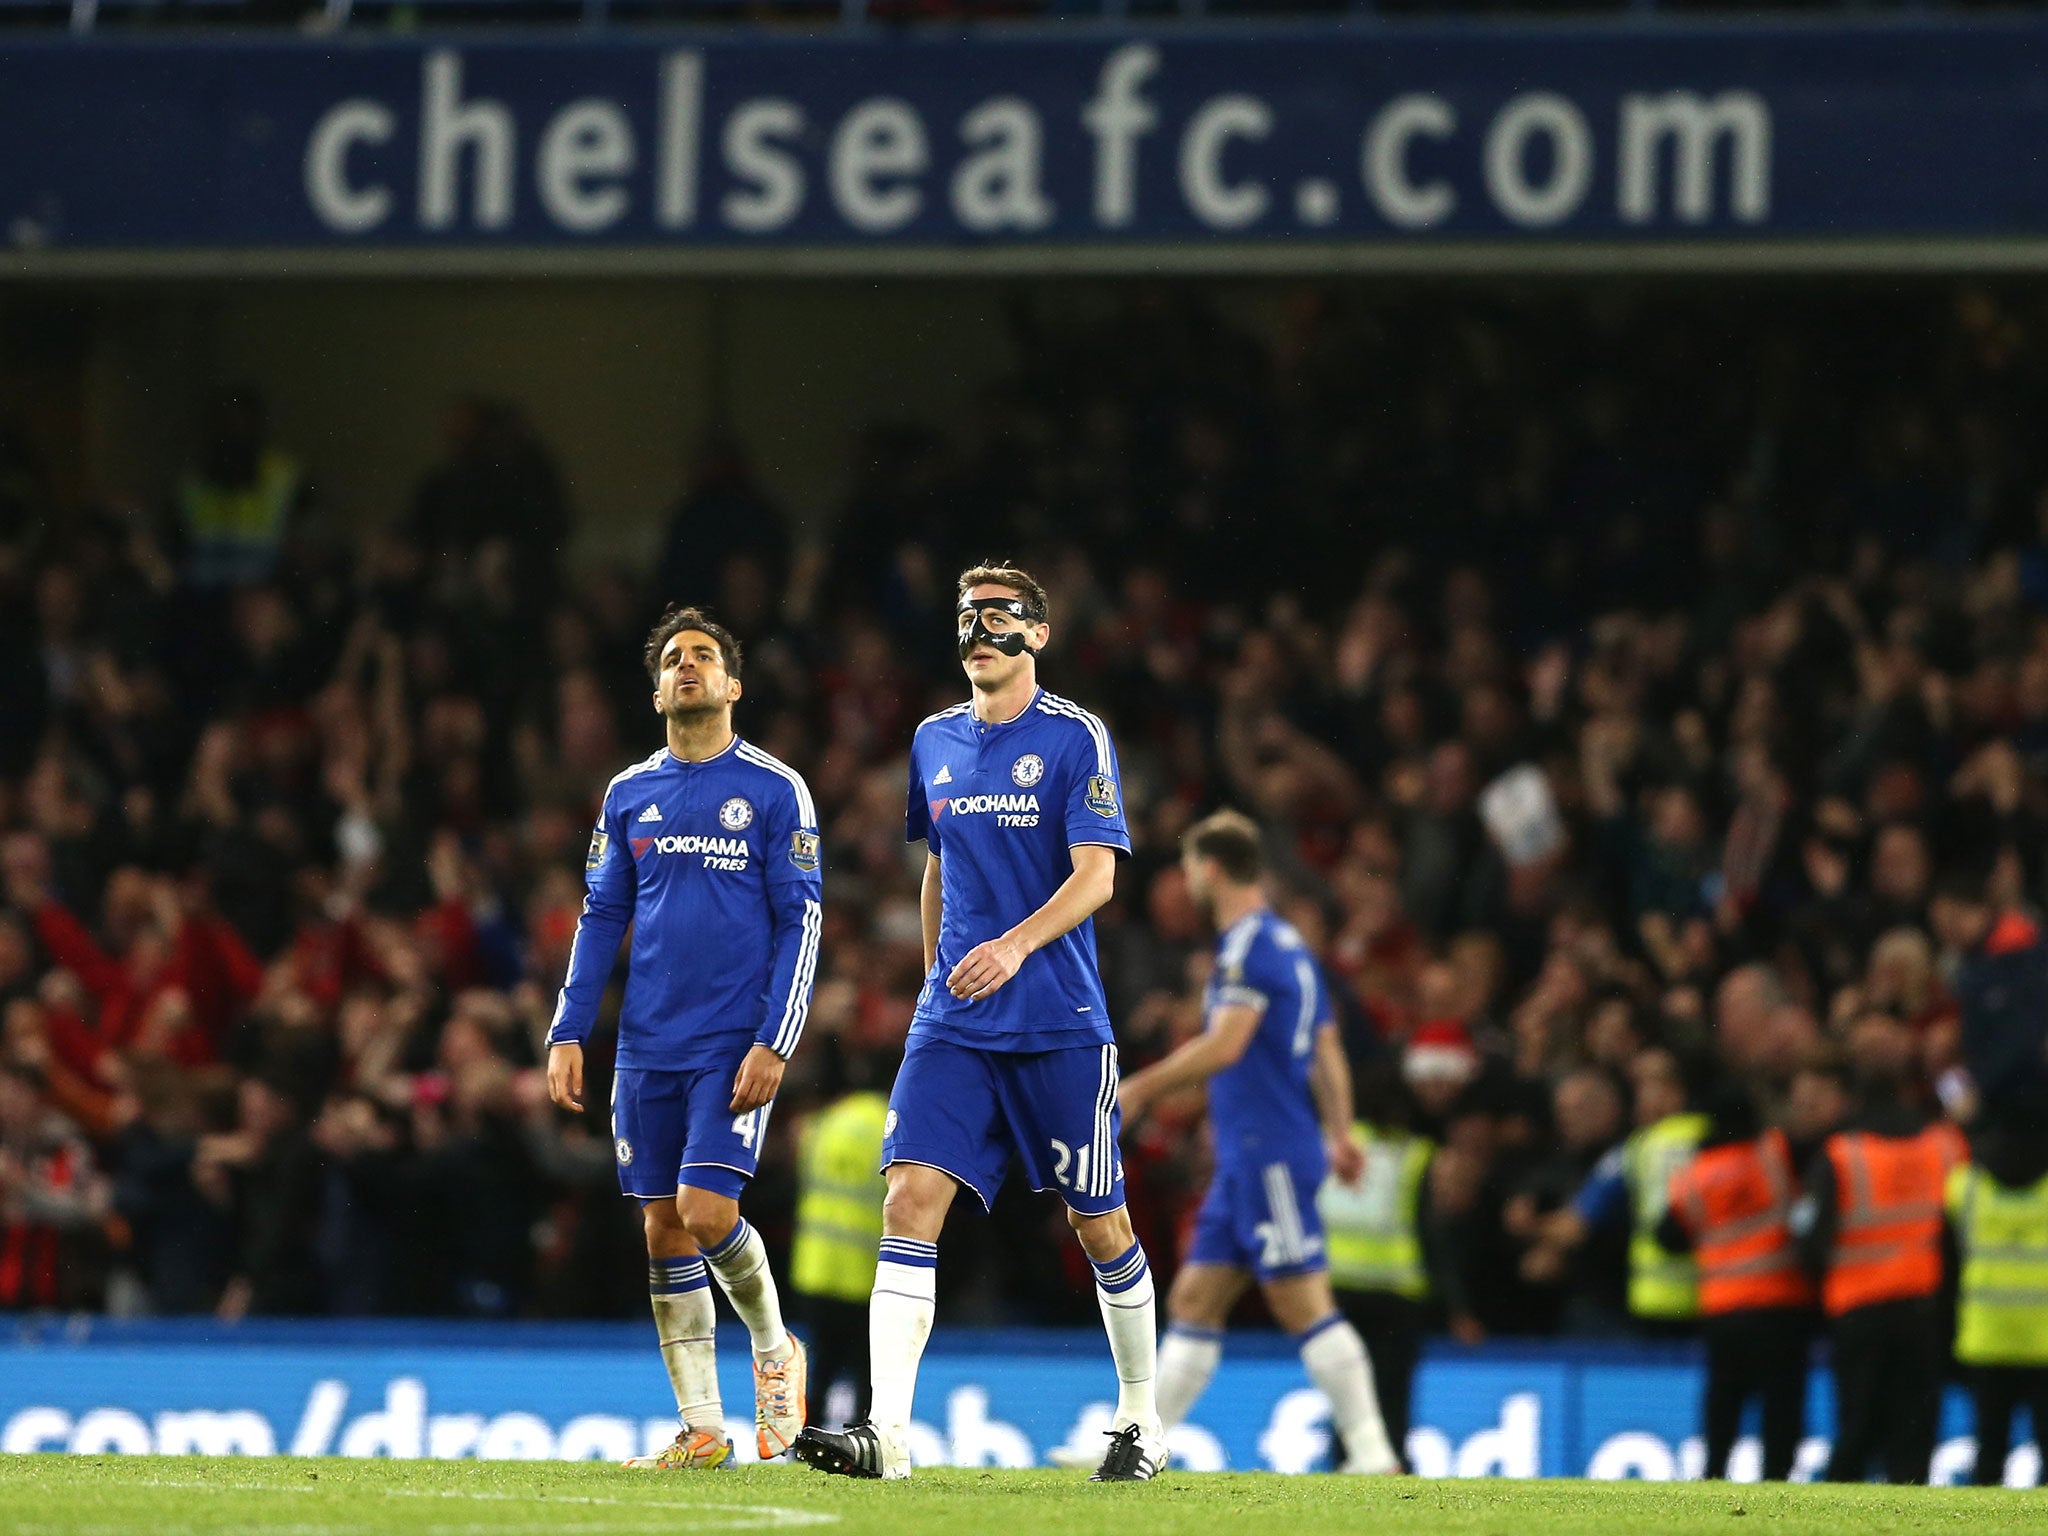 Chelsea pair Cesc Fabregas and Nemanja Matic